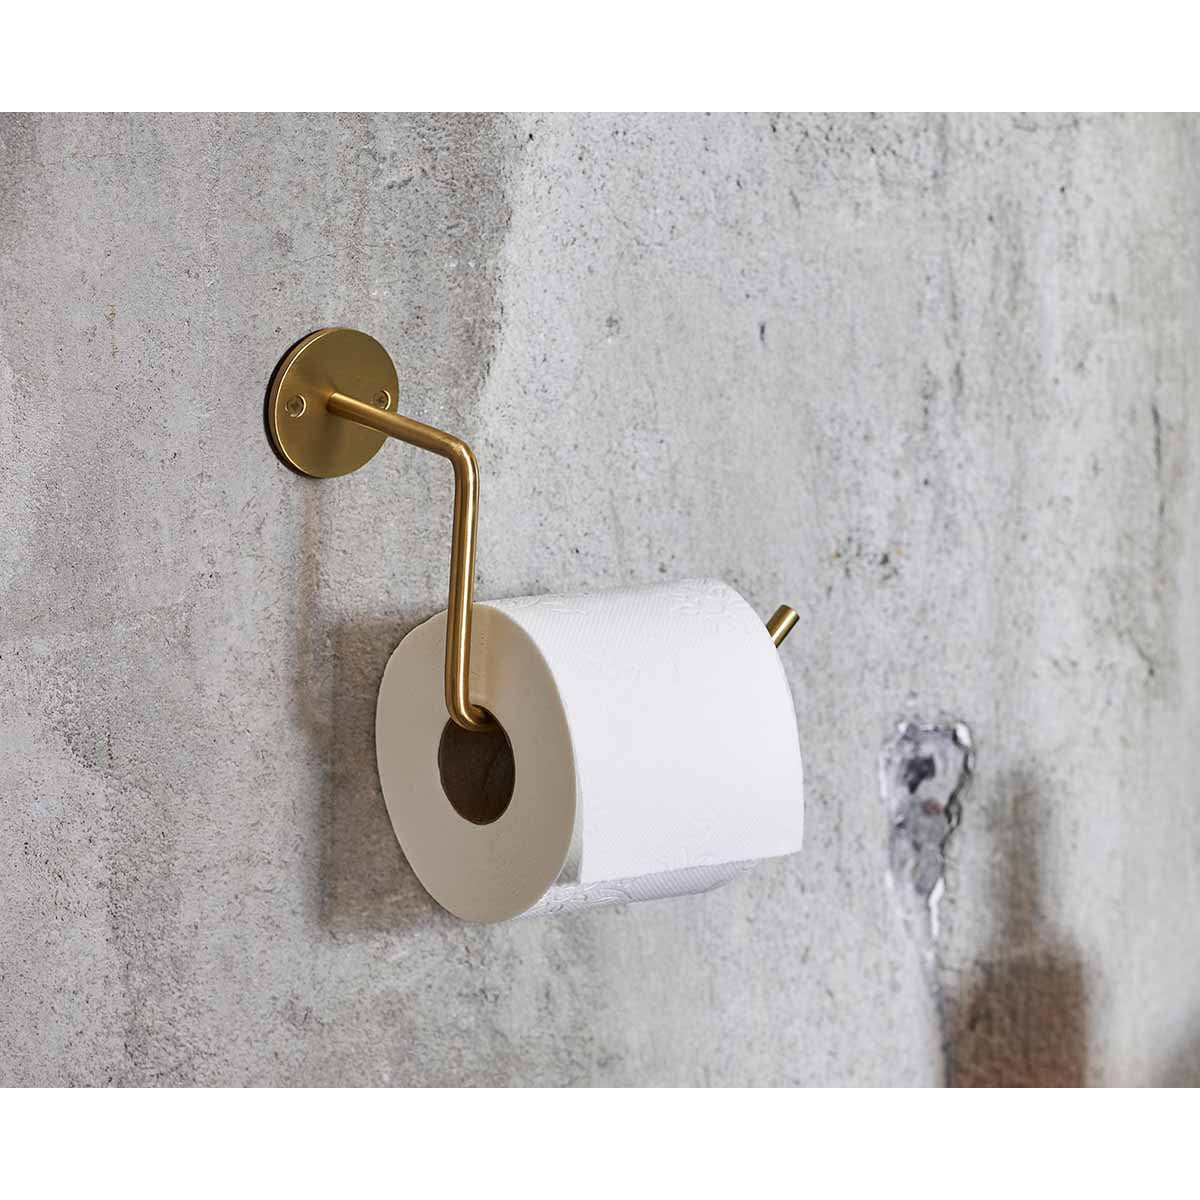 Wall toilet roll holder - brass